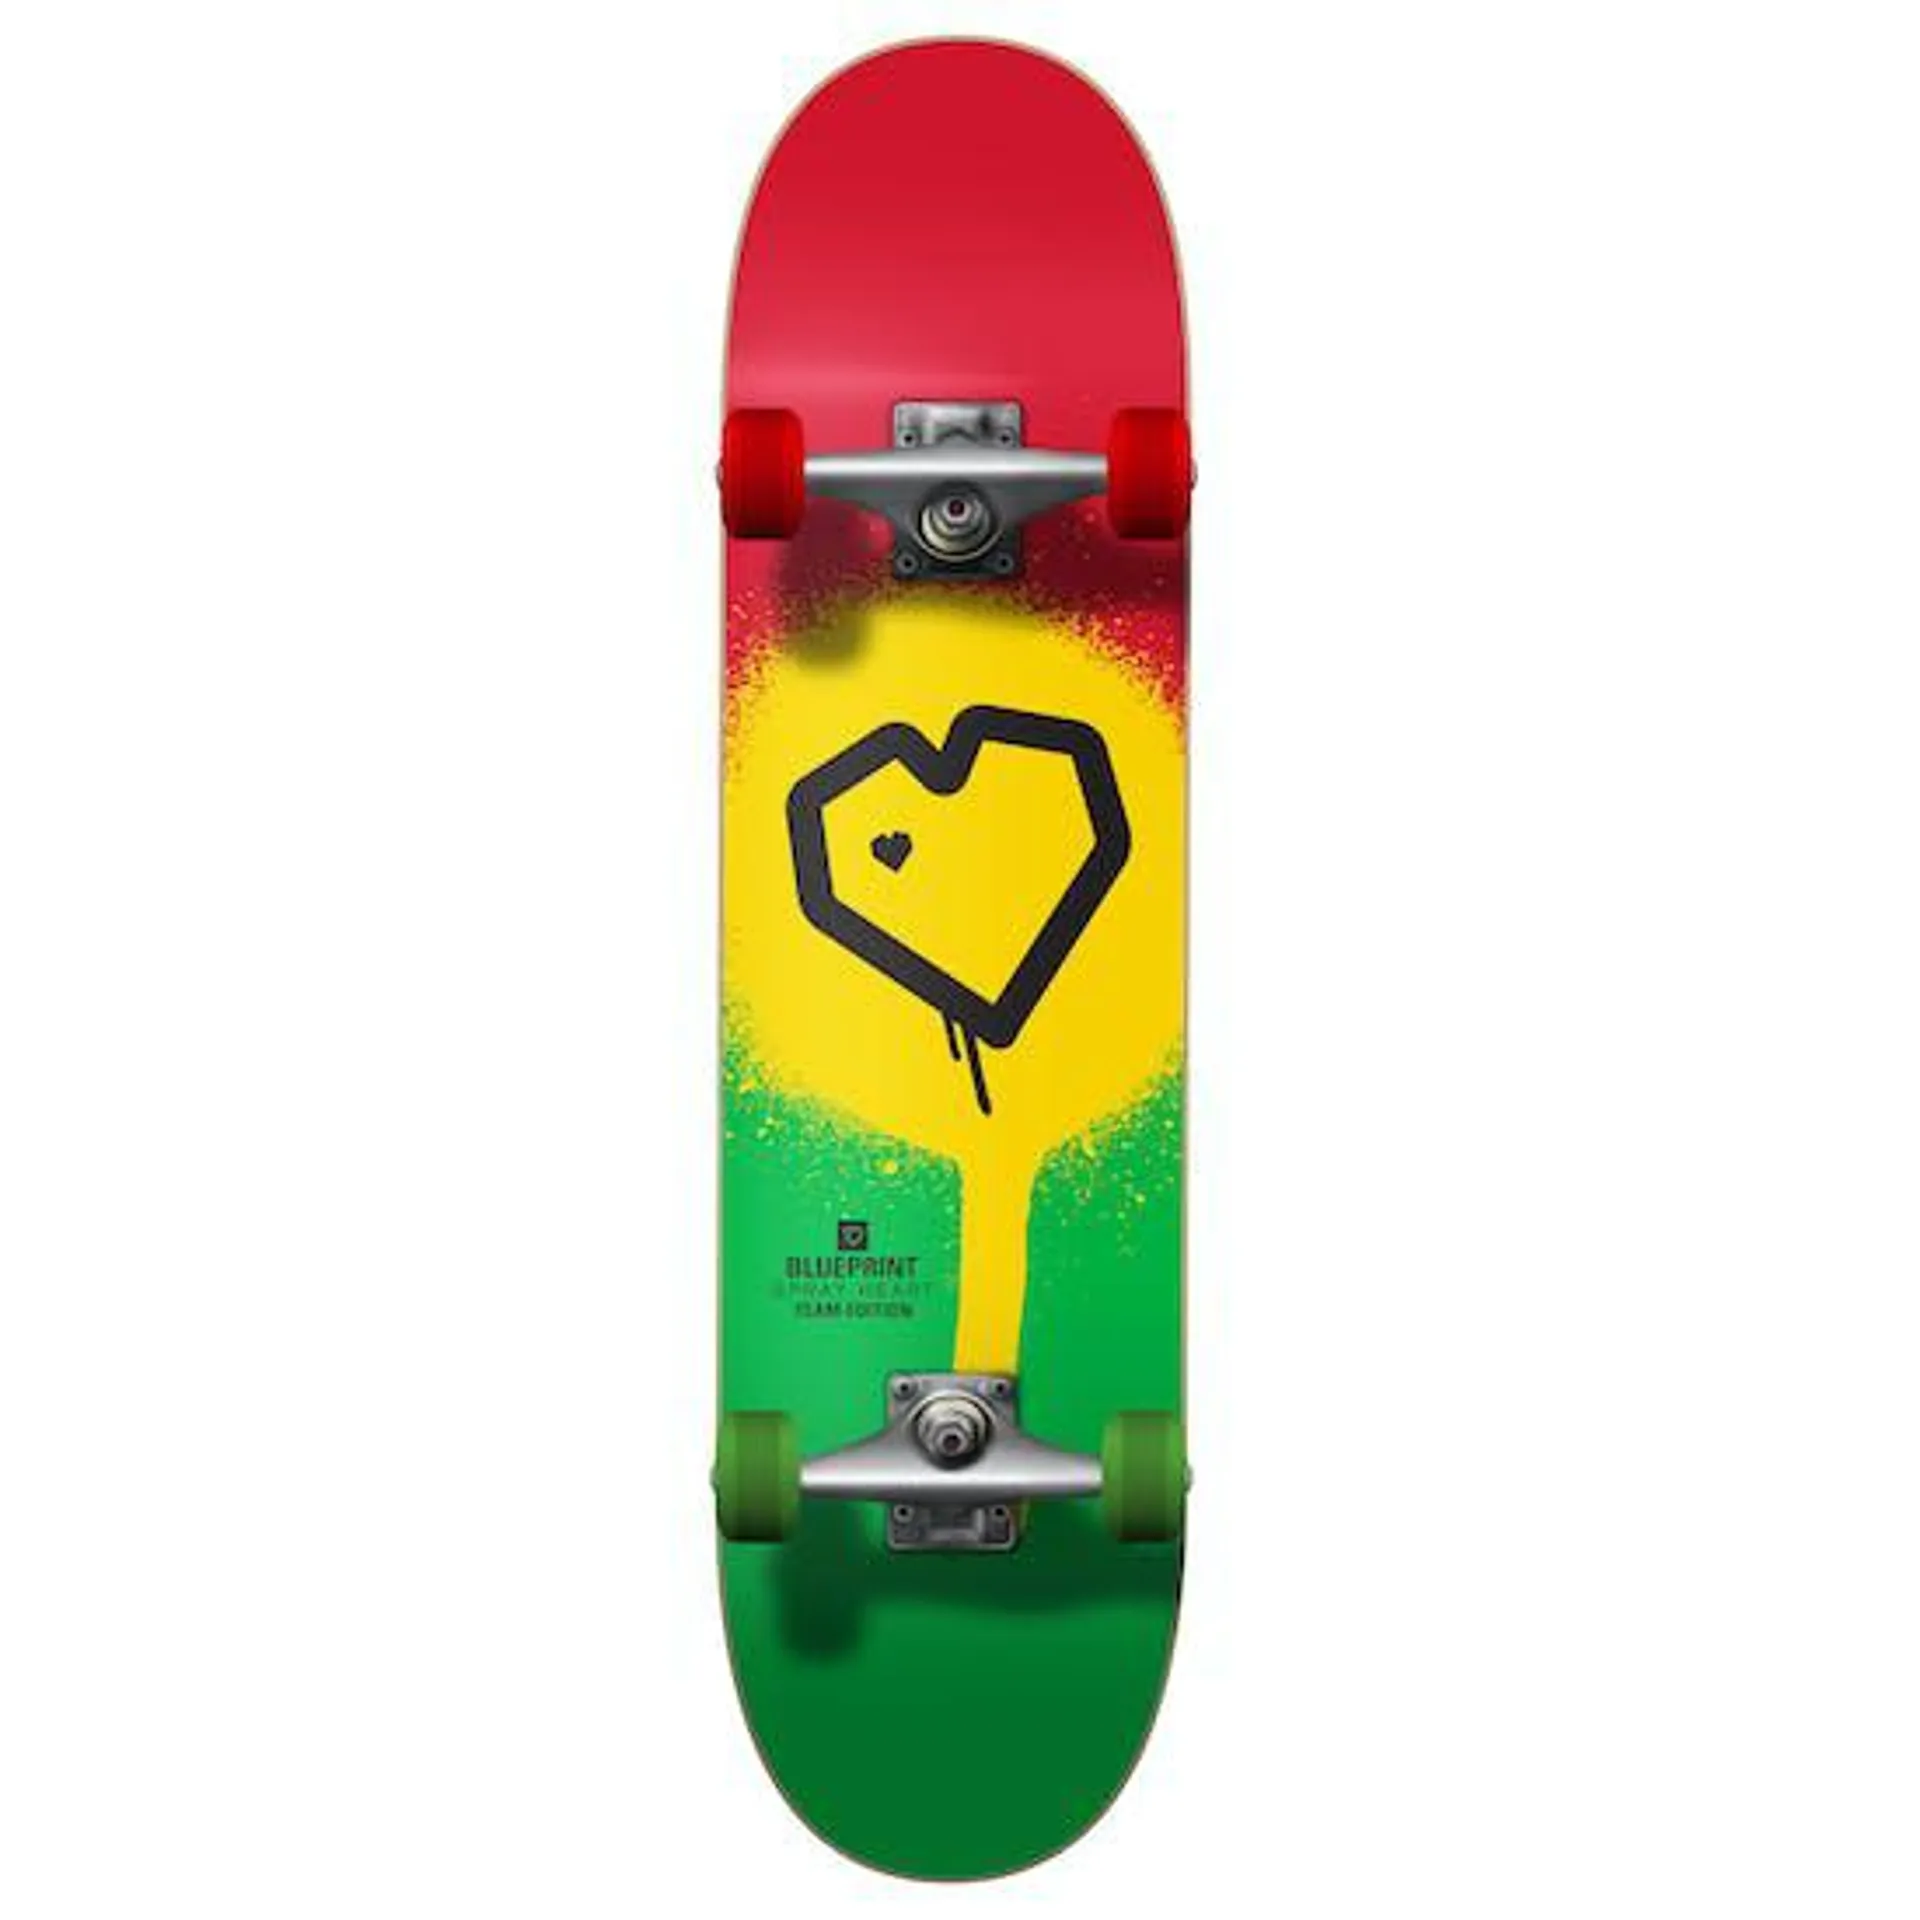 Blueprint Spray Heart Complete Skateboard